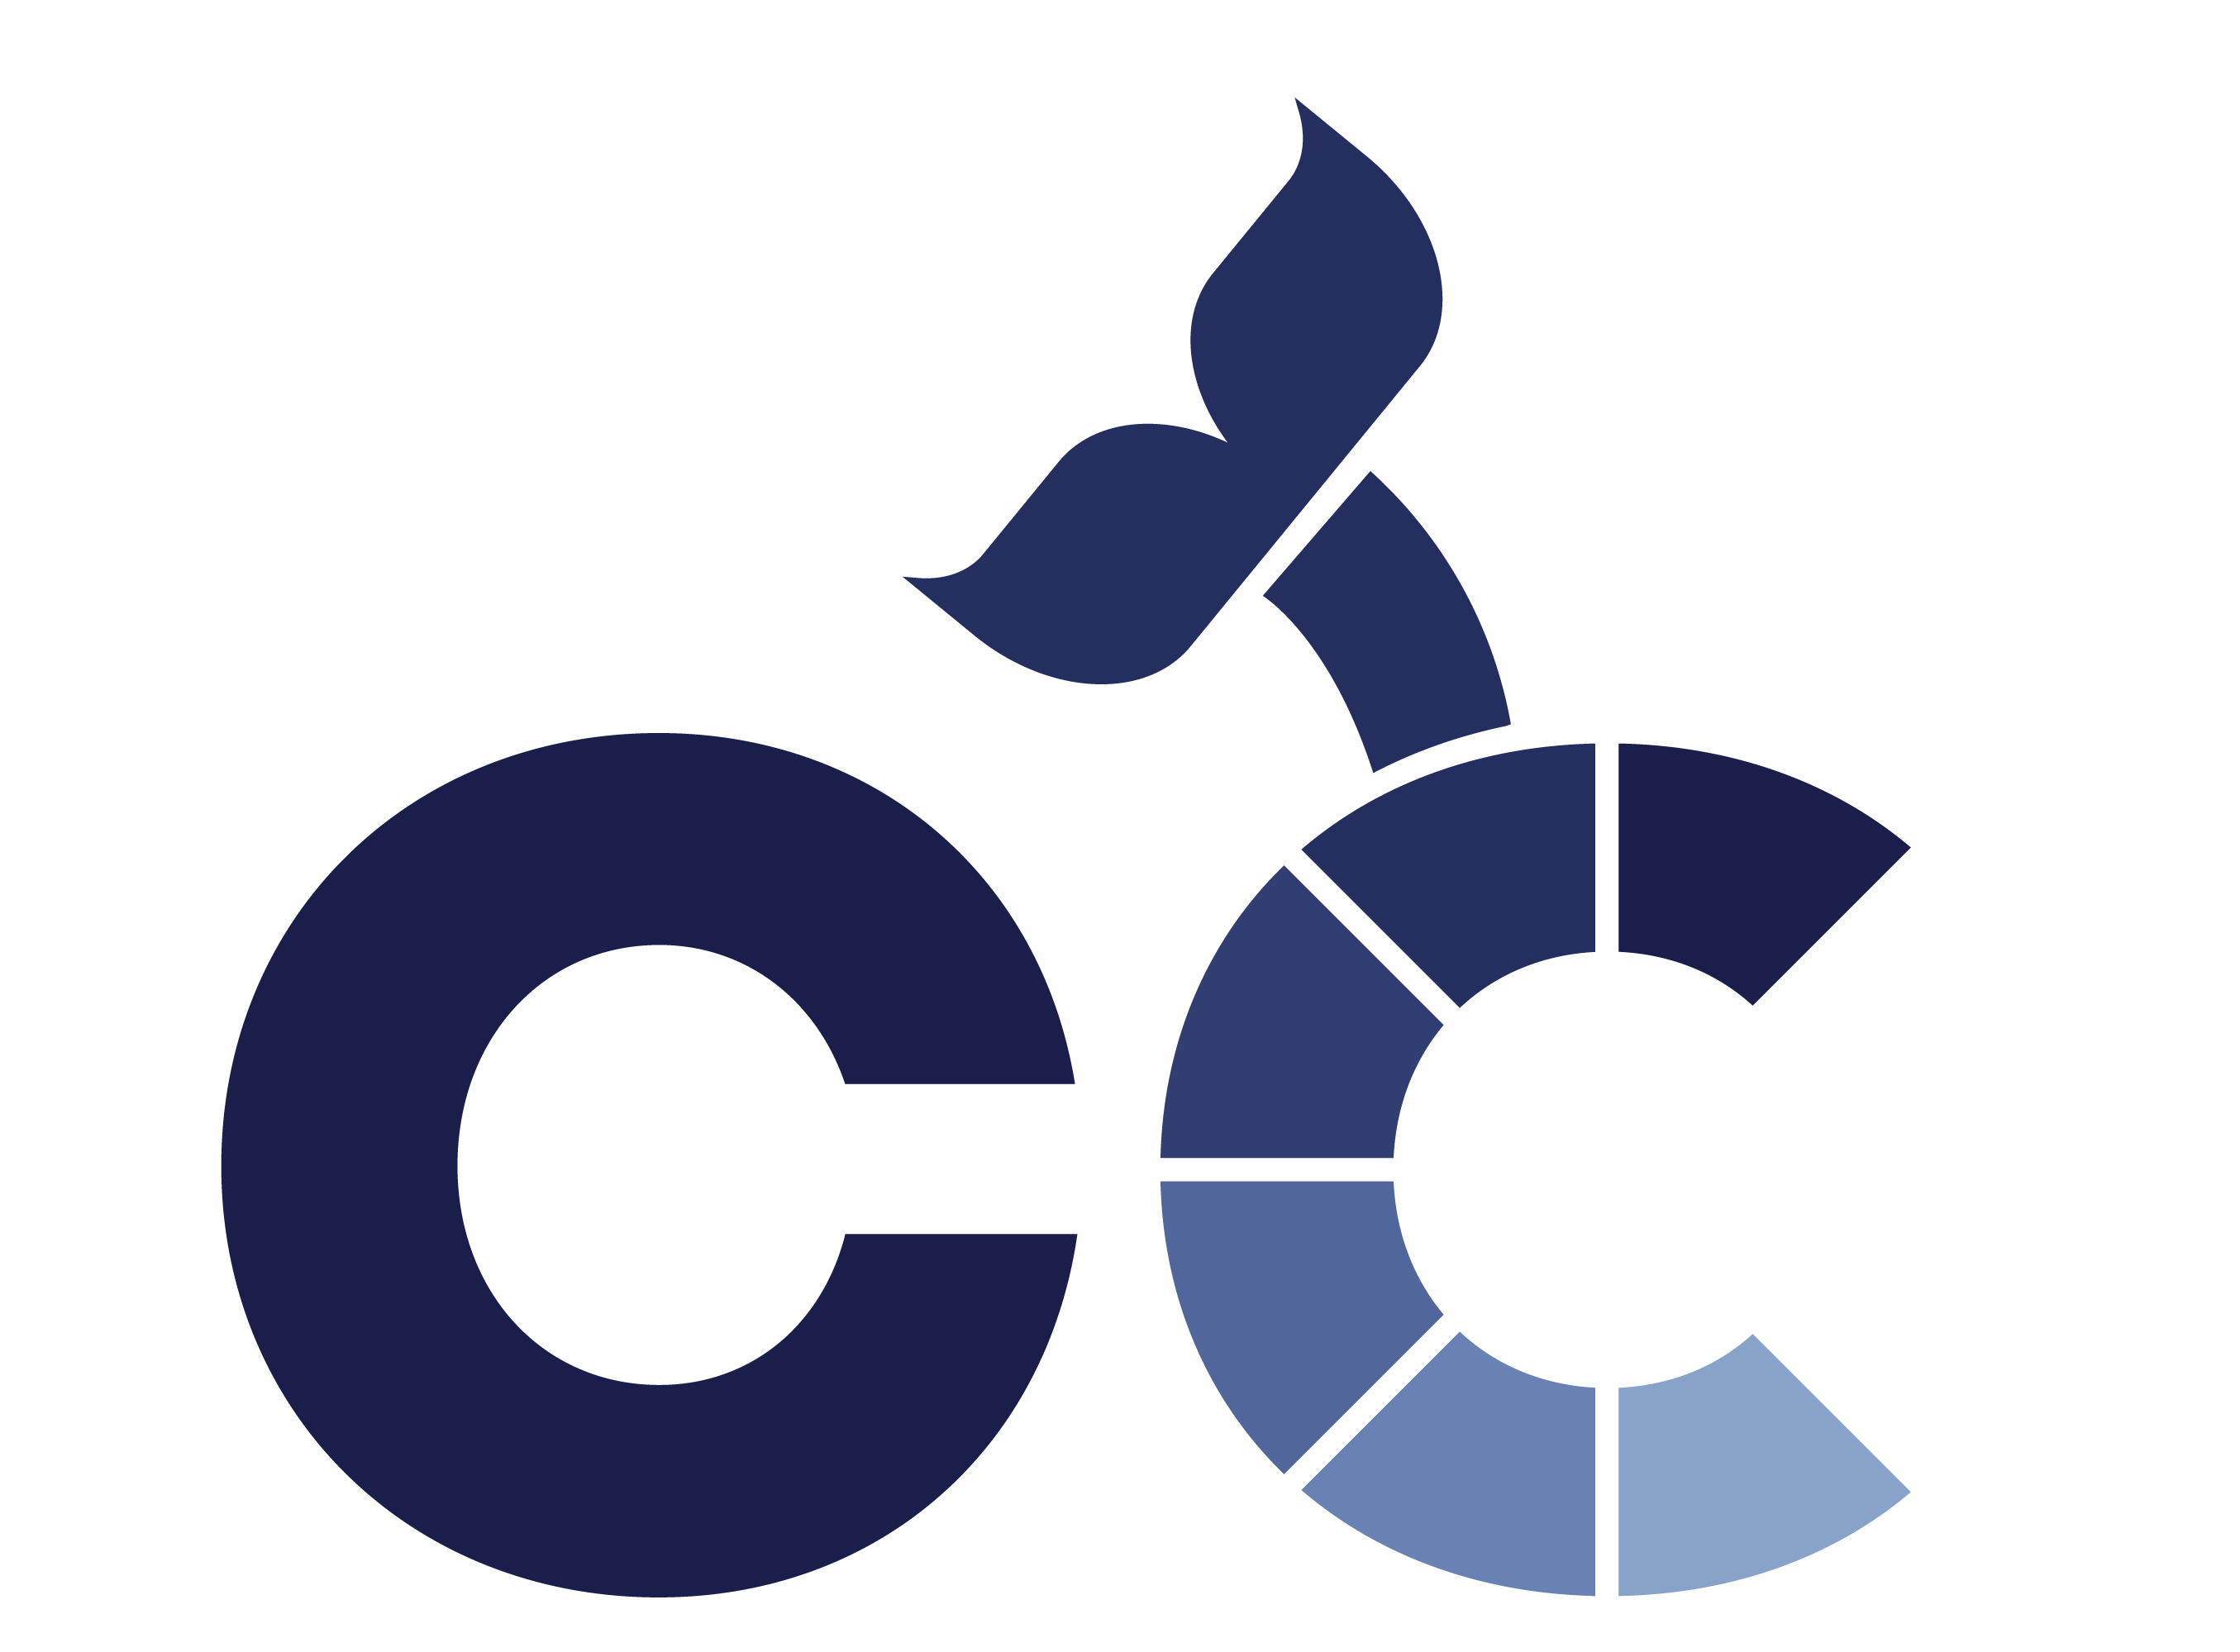 cc [CS Open CourseWare]